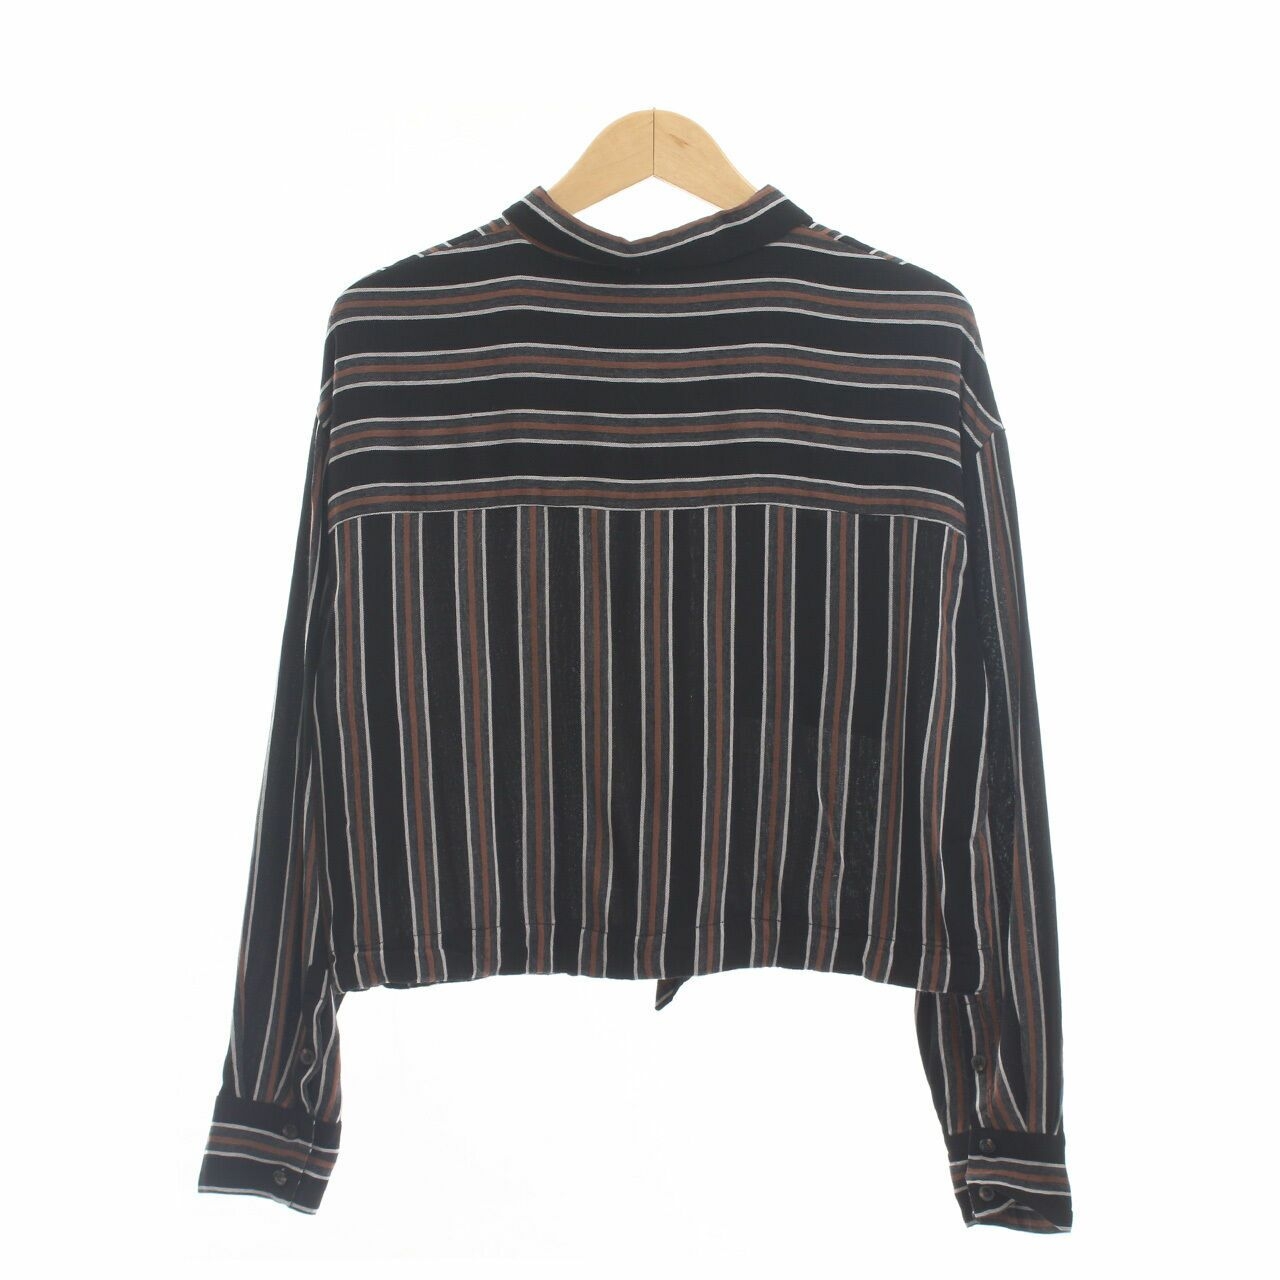 Zara Brown & Black Stripes Shirt